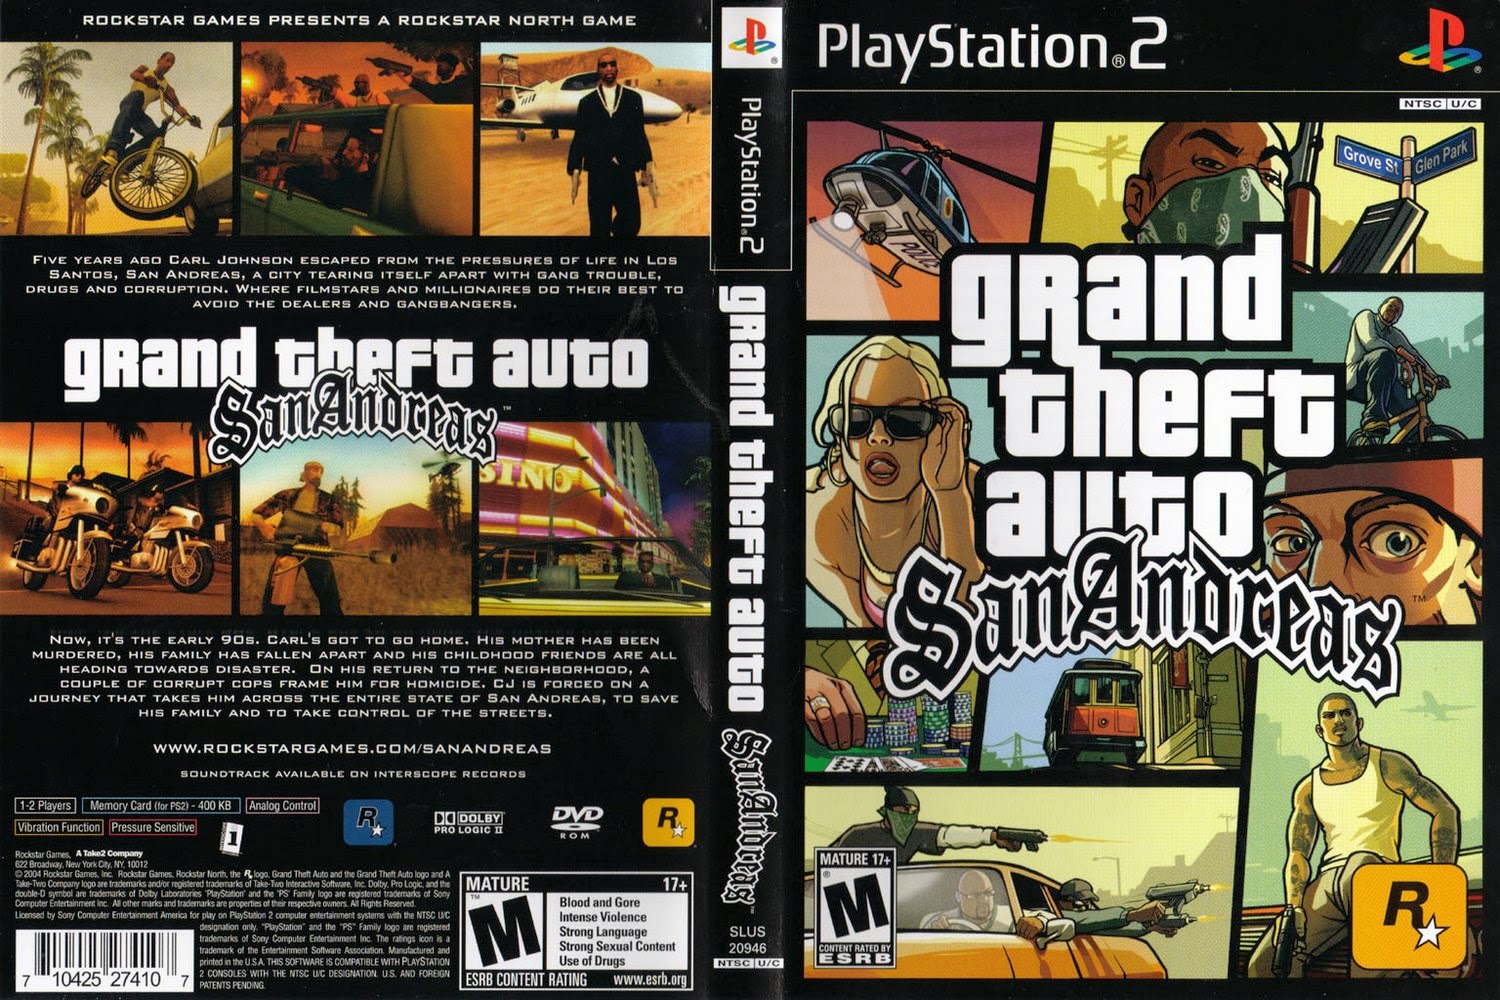 Jogo Ps2 GTA San Andreas - Videogames - Nossa Senhora da